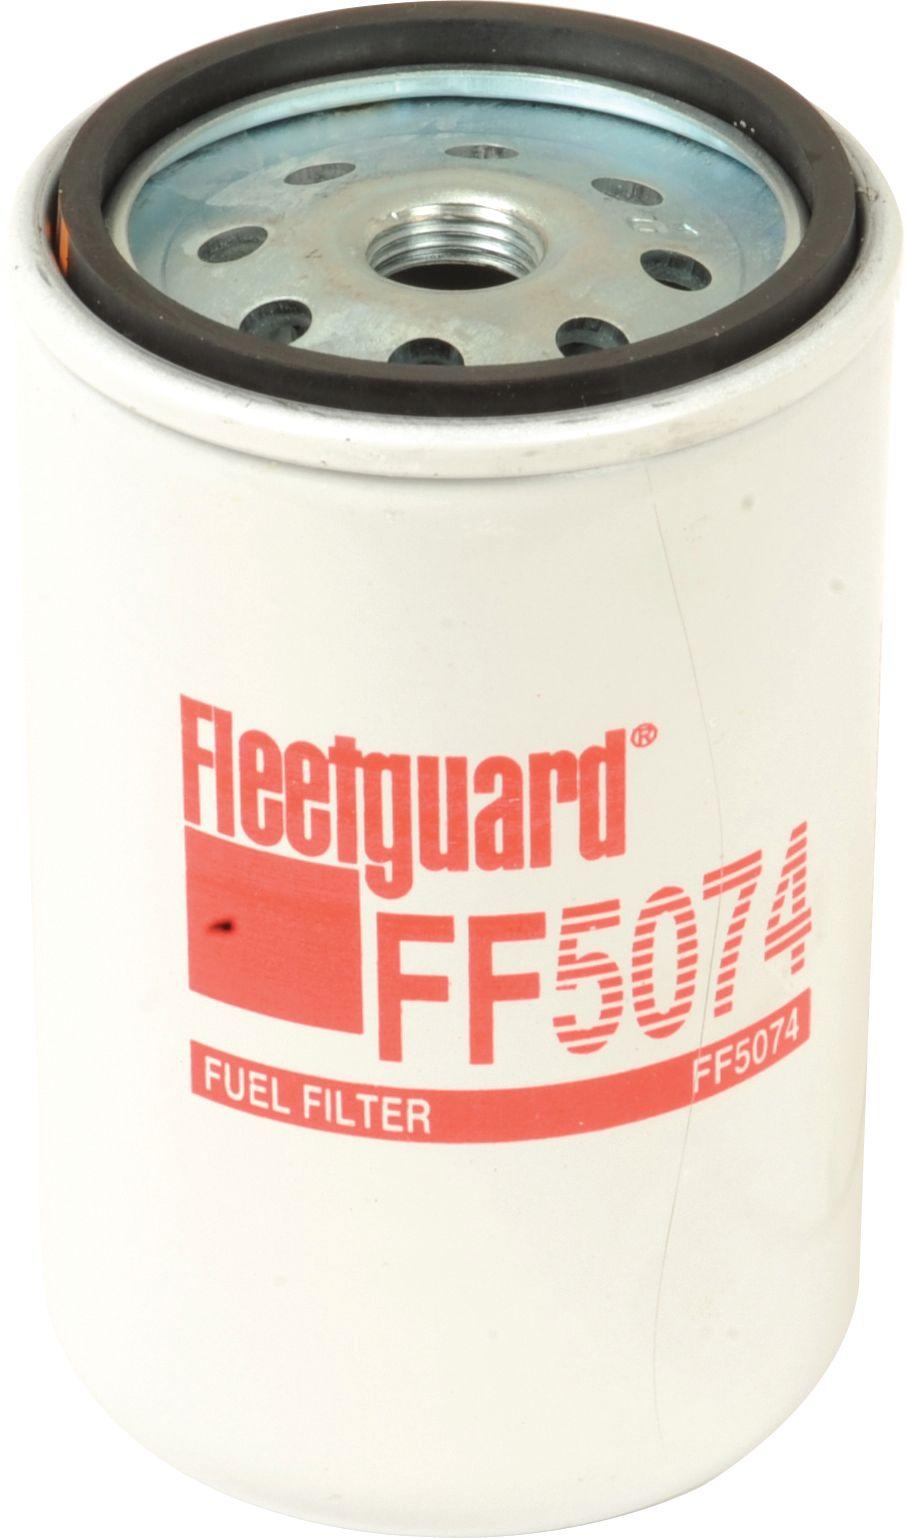 DEUTZ-FAHR FUEL FILTER FF5074 109059